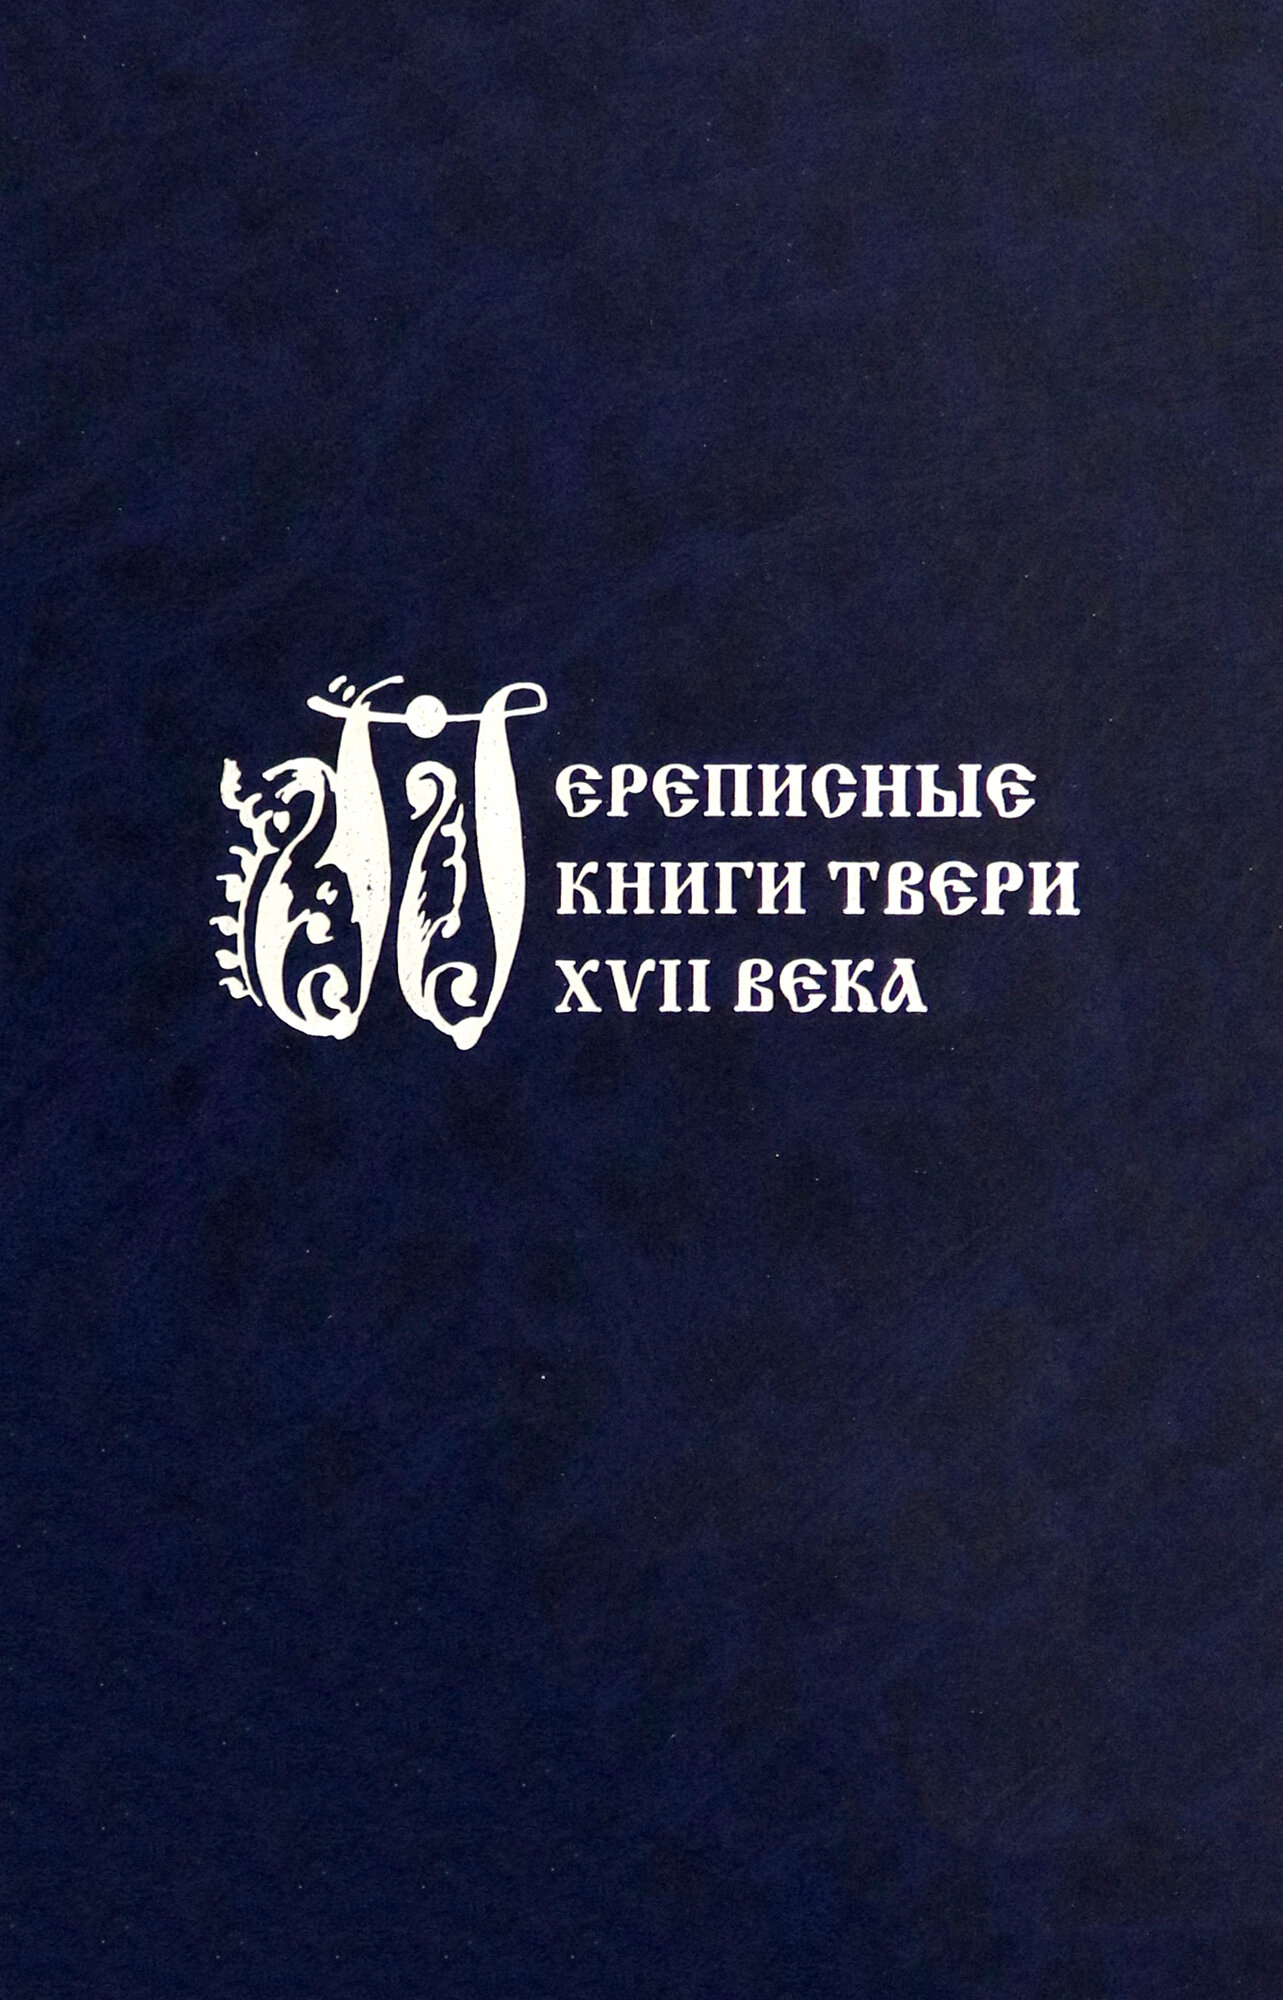 Переписные книги Твери XVII века - фото №3